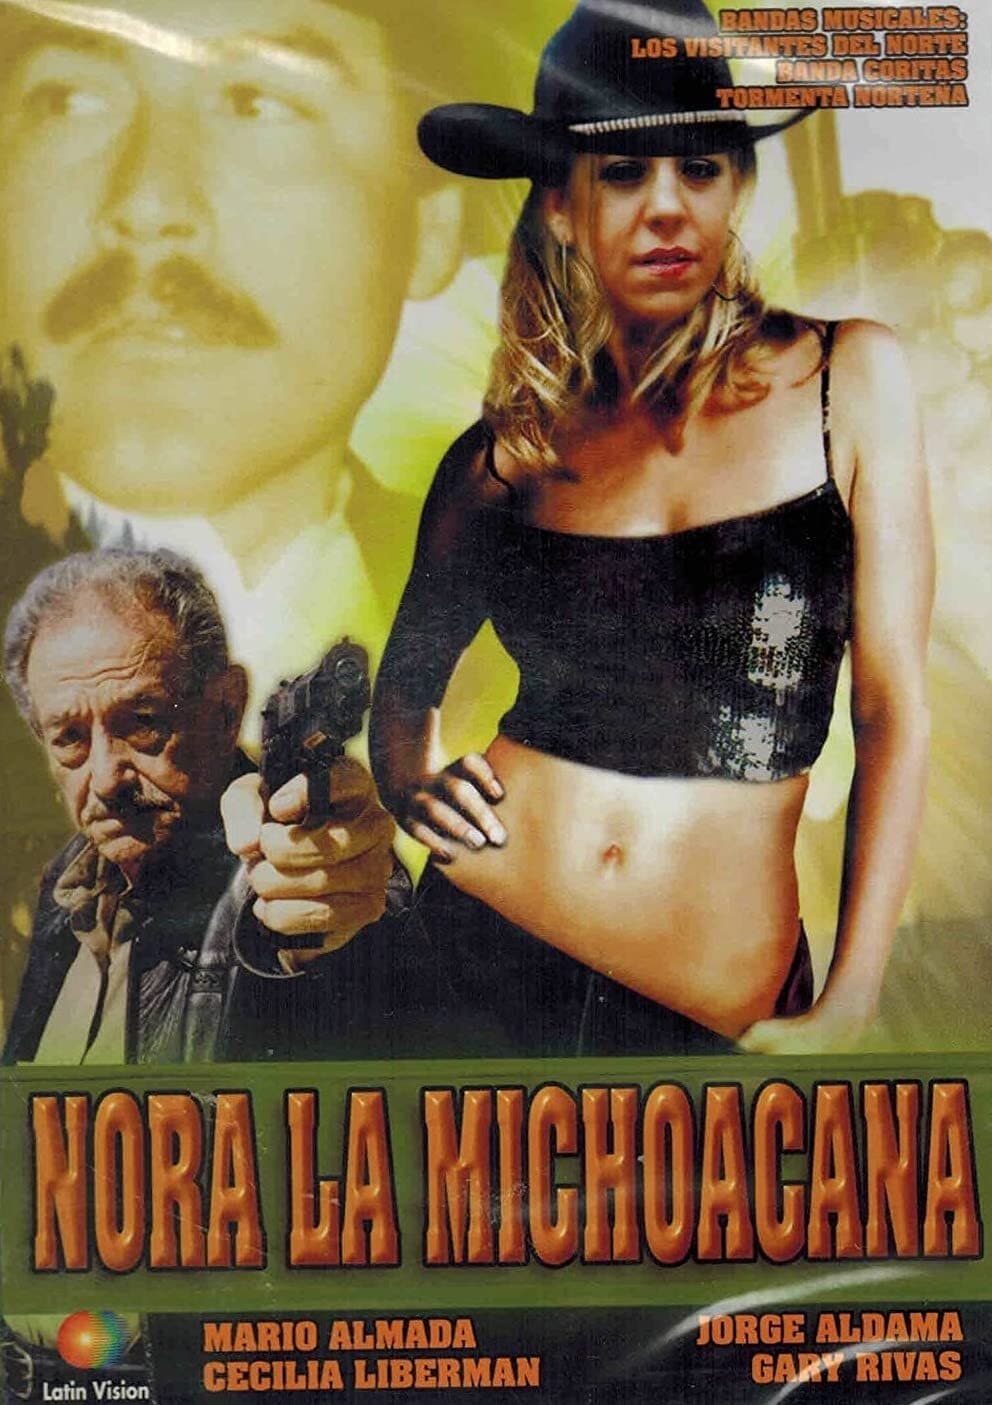 Nora la Michoacana